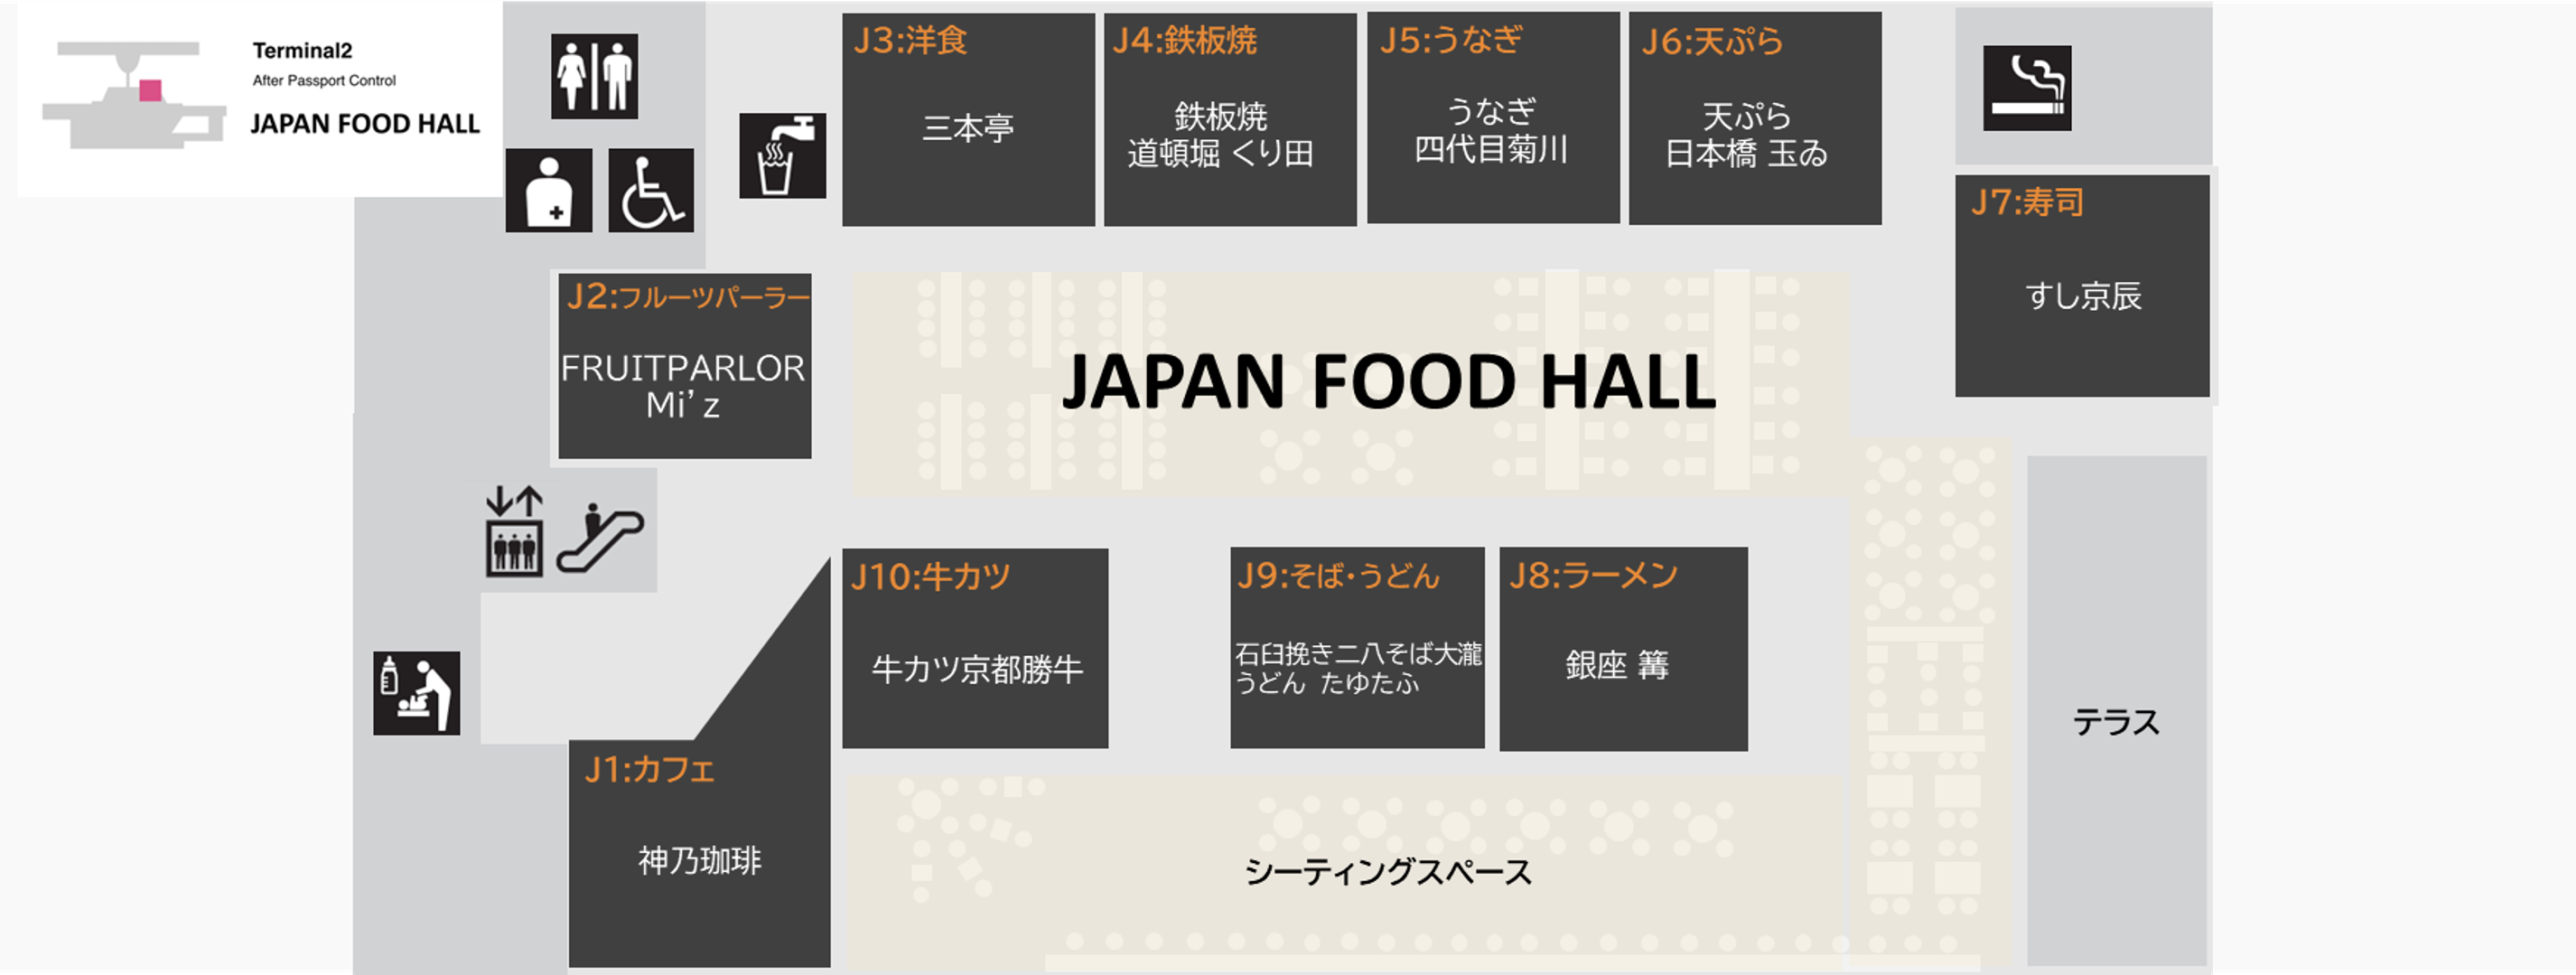 JAPAN FOOD HALL 店舗マップの図   店舗一覧は画像の直後に掲載しています。